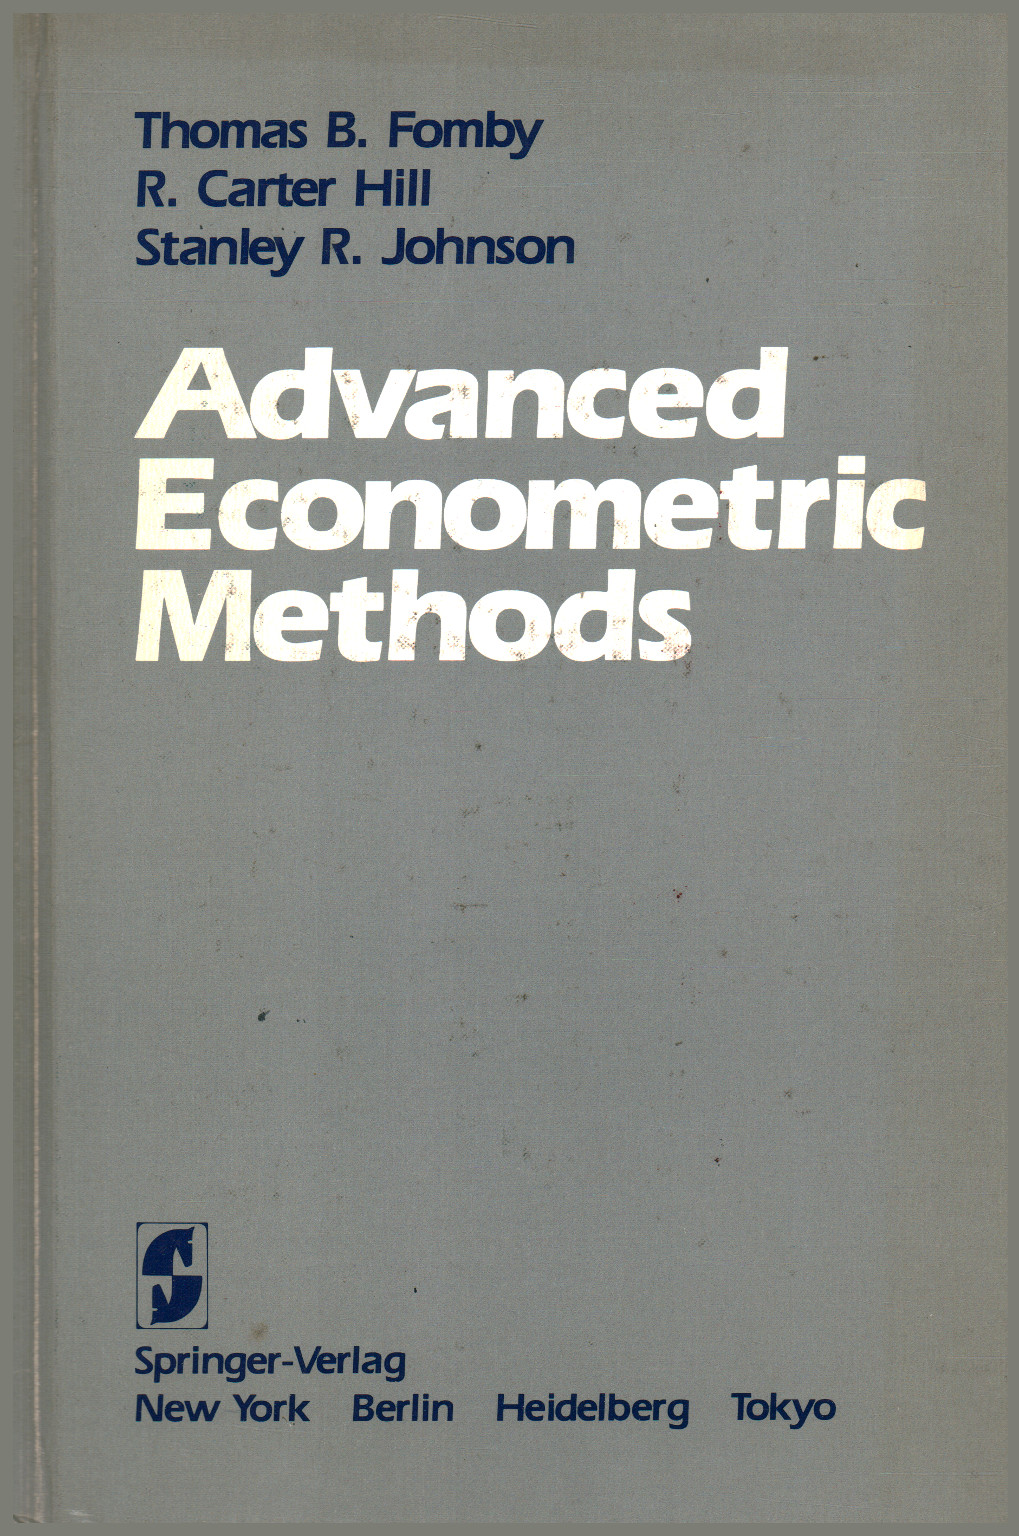 Advanced Econometric Methods, Thomas B. Fomby R. Carter Hill Stanley R. Johnson